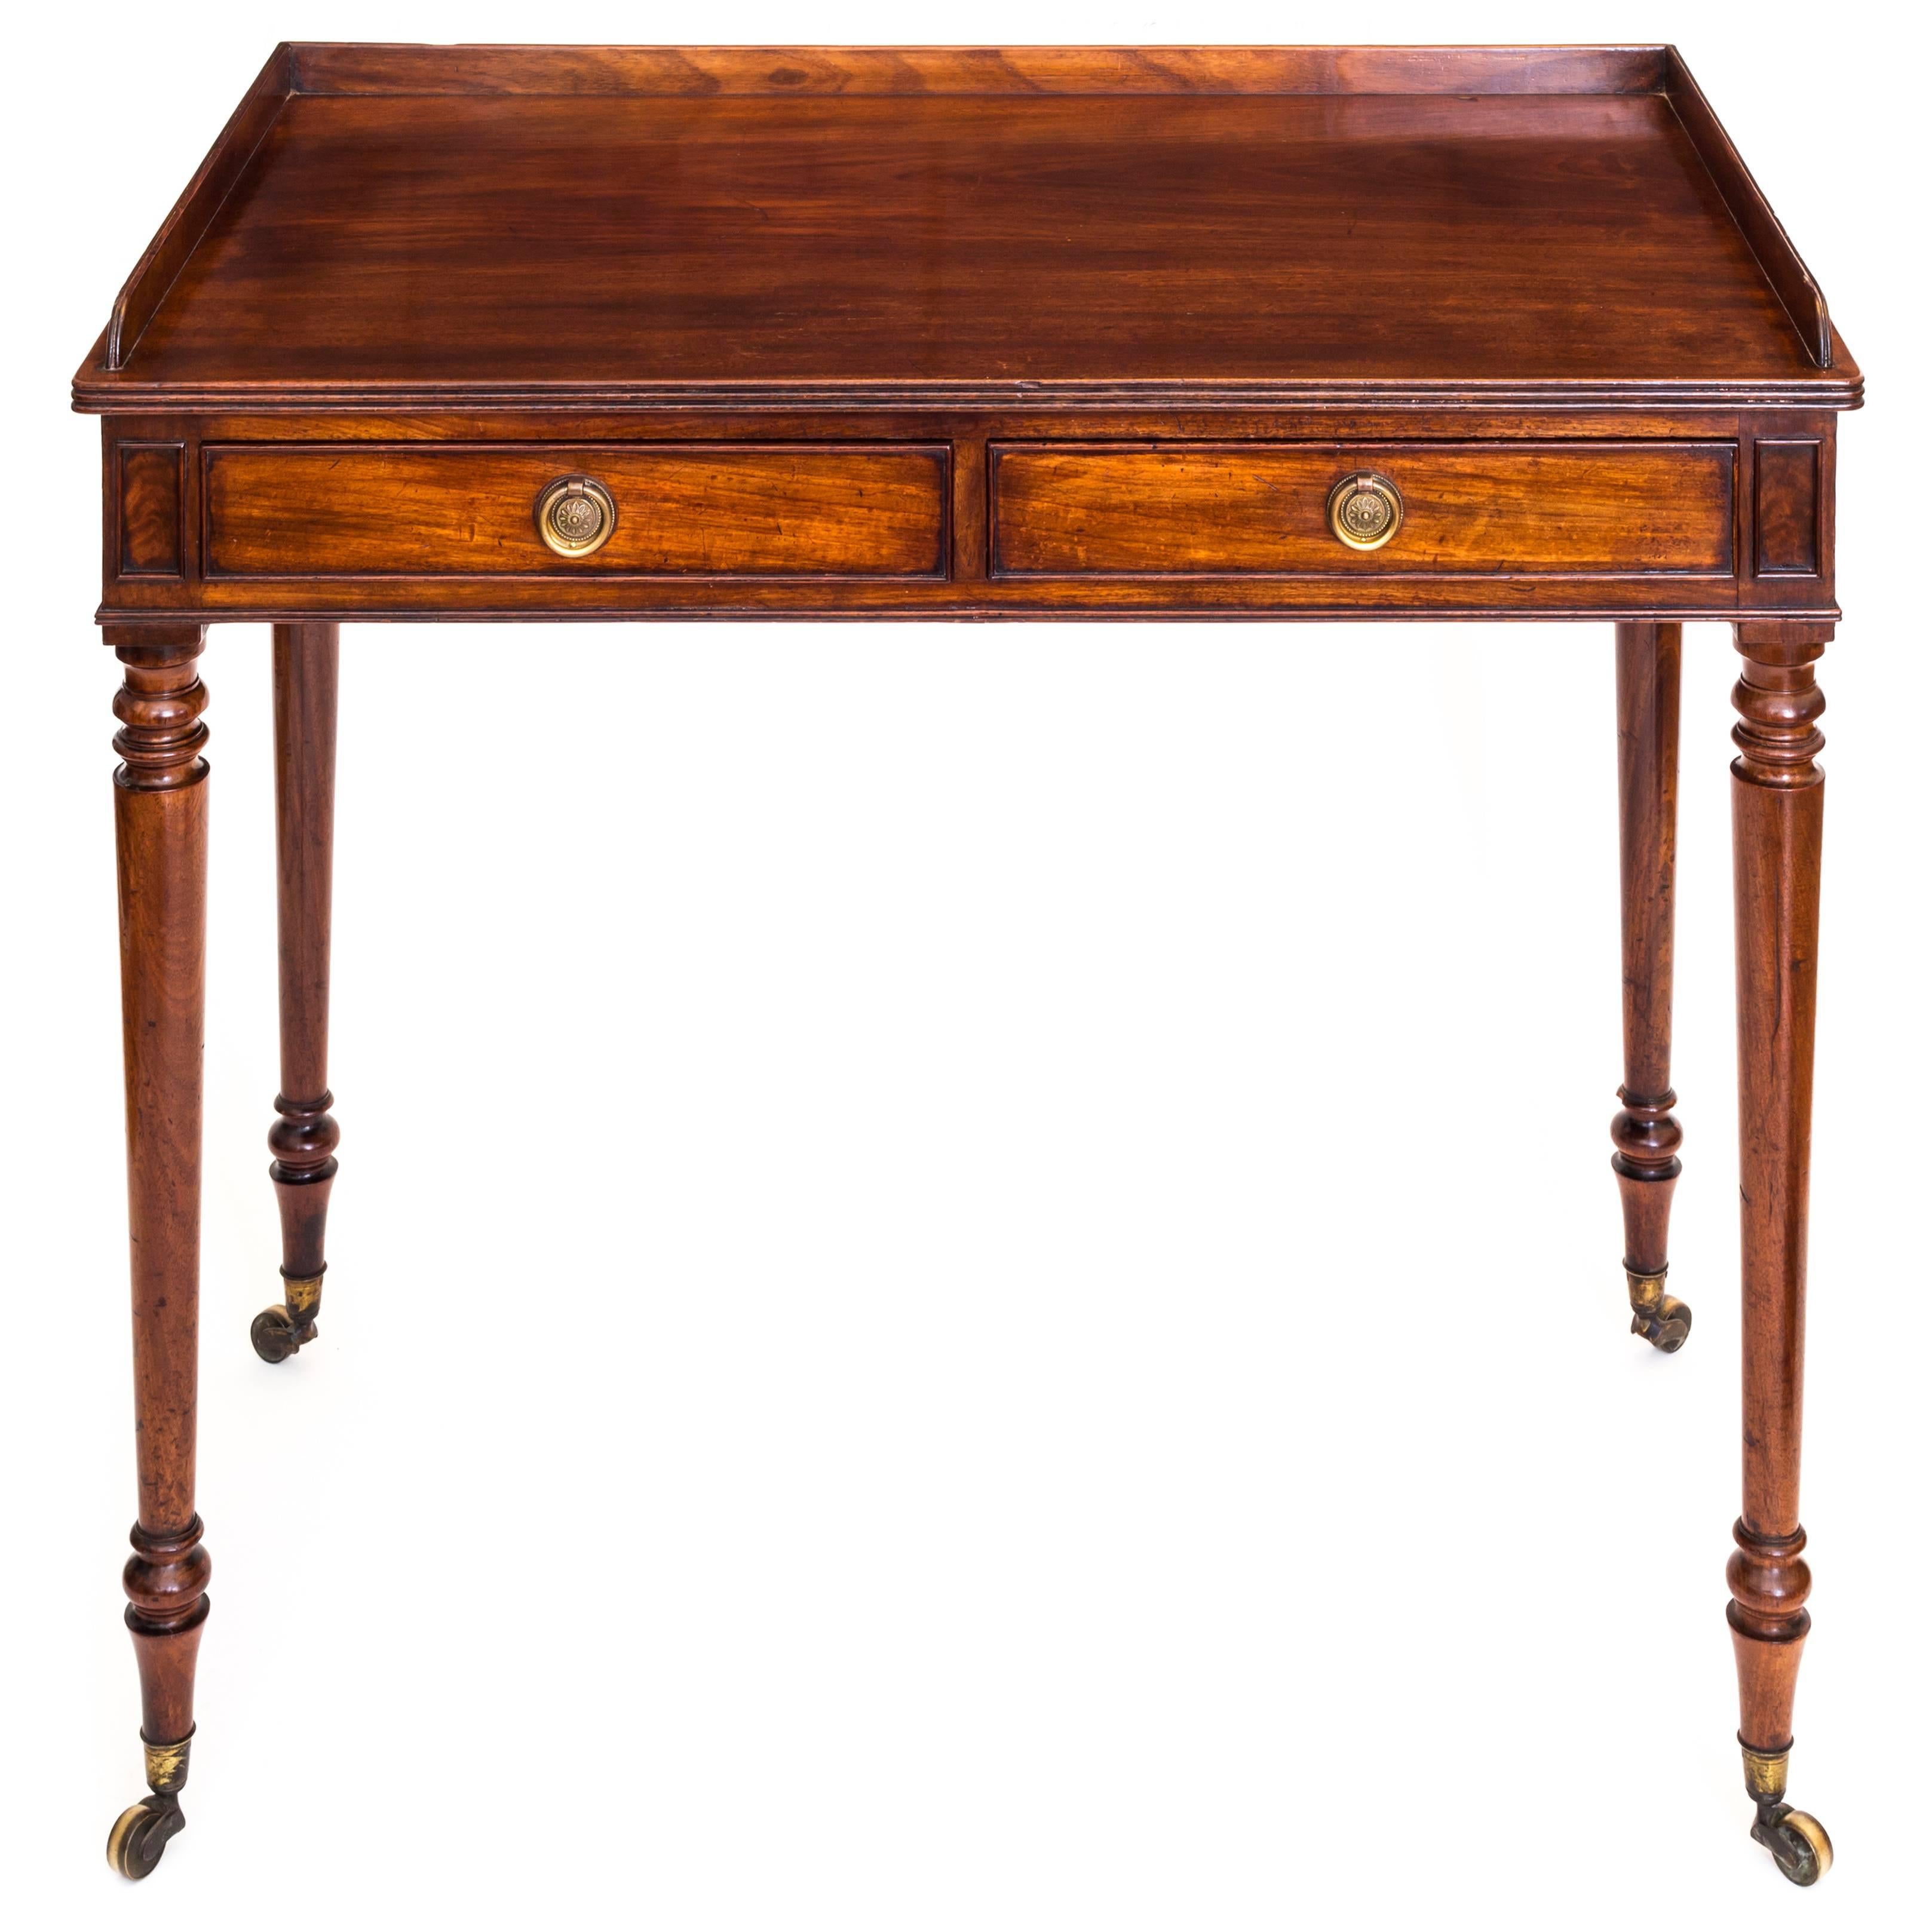 Early 19th Century English Regency Gillows Mahogany Small Desk or Dressing Table